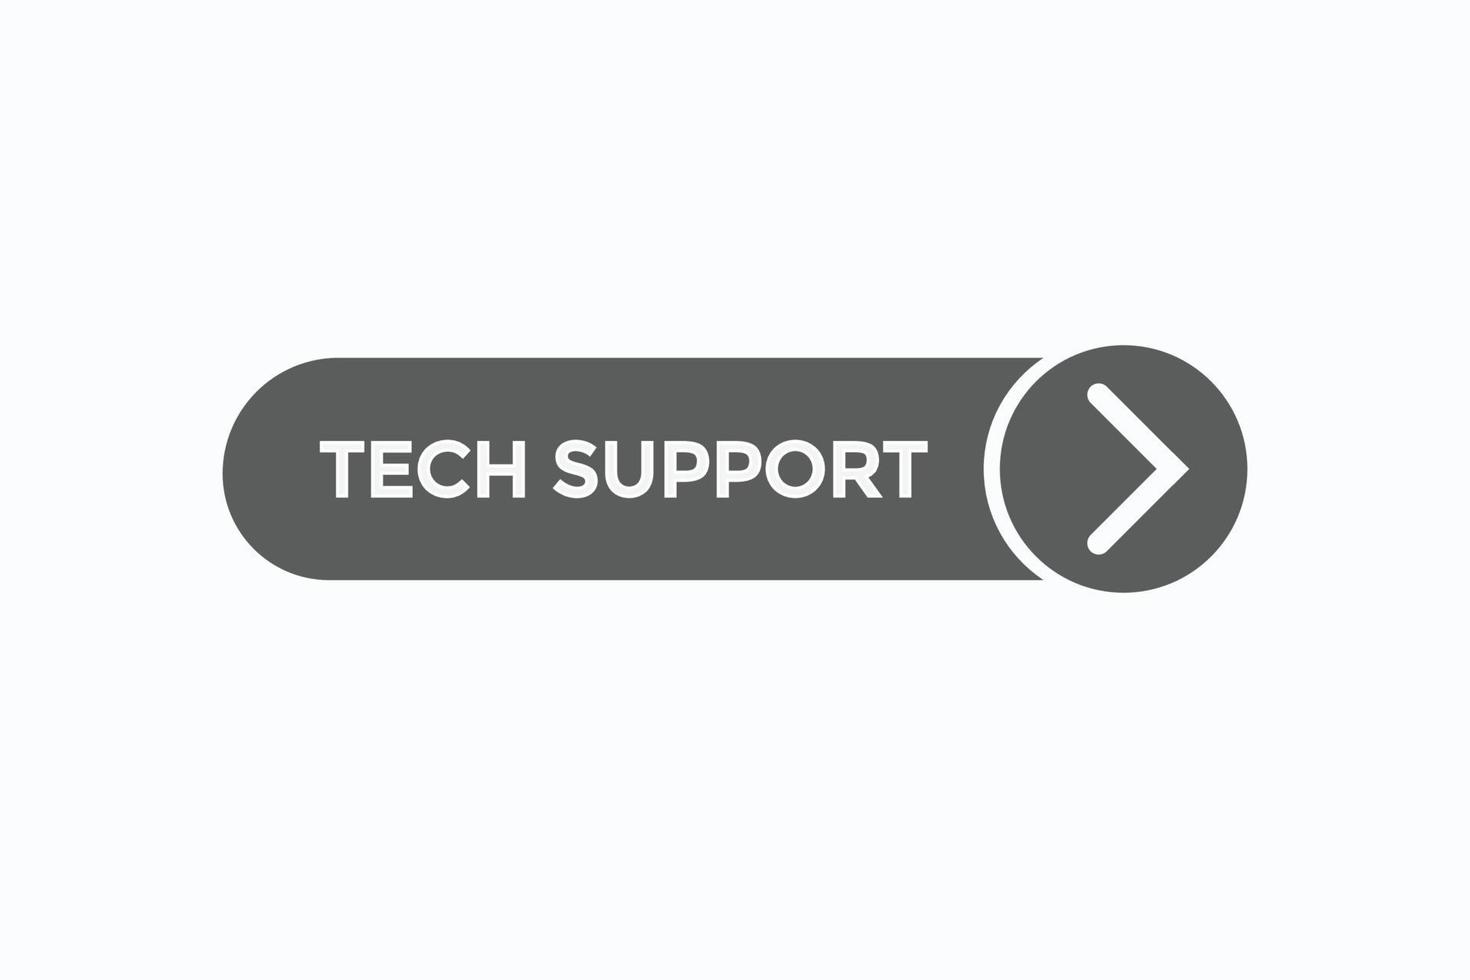 tech support button vectors.sign label speech bubble tech support vector